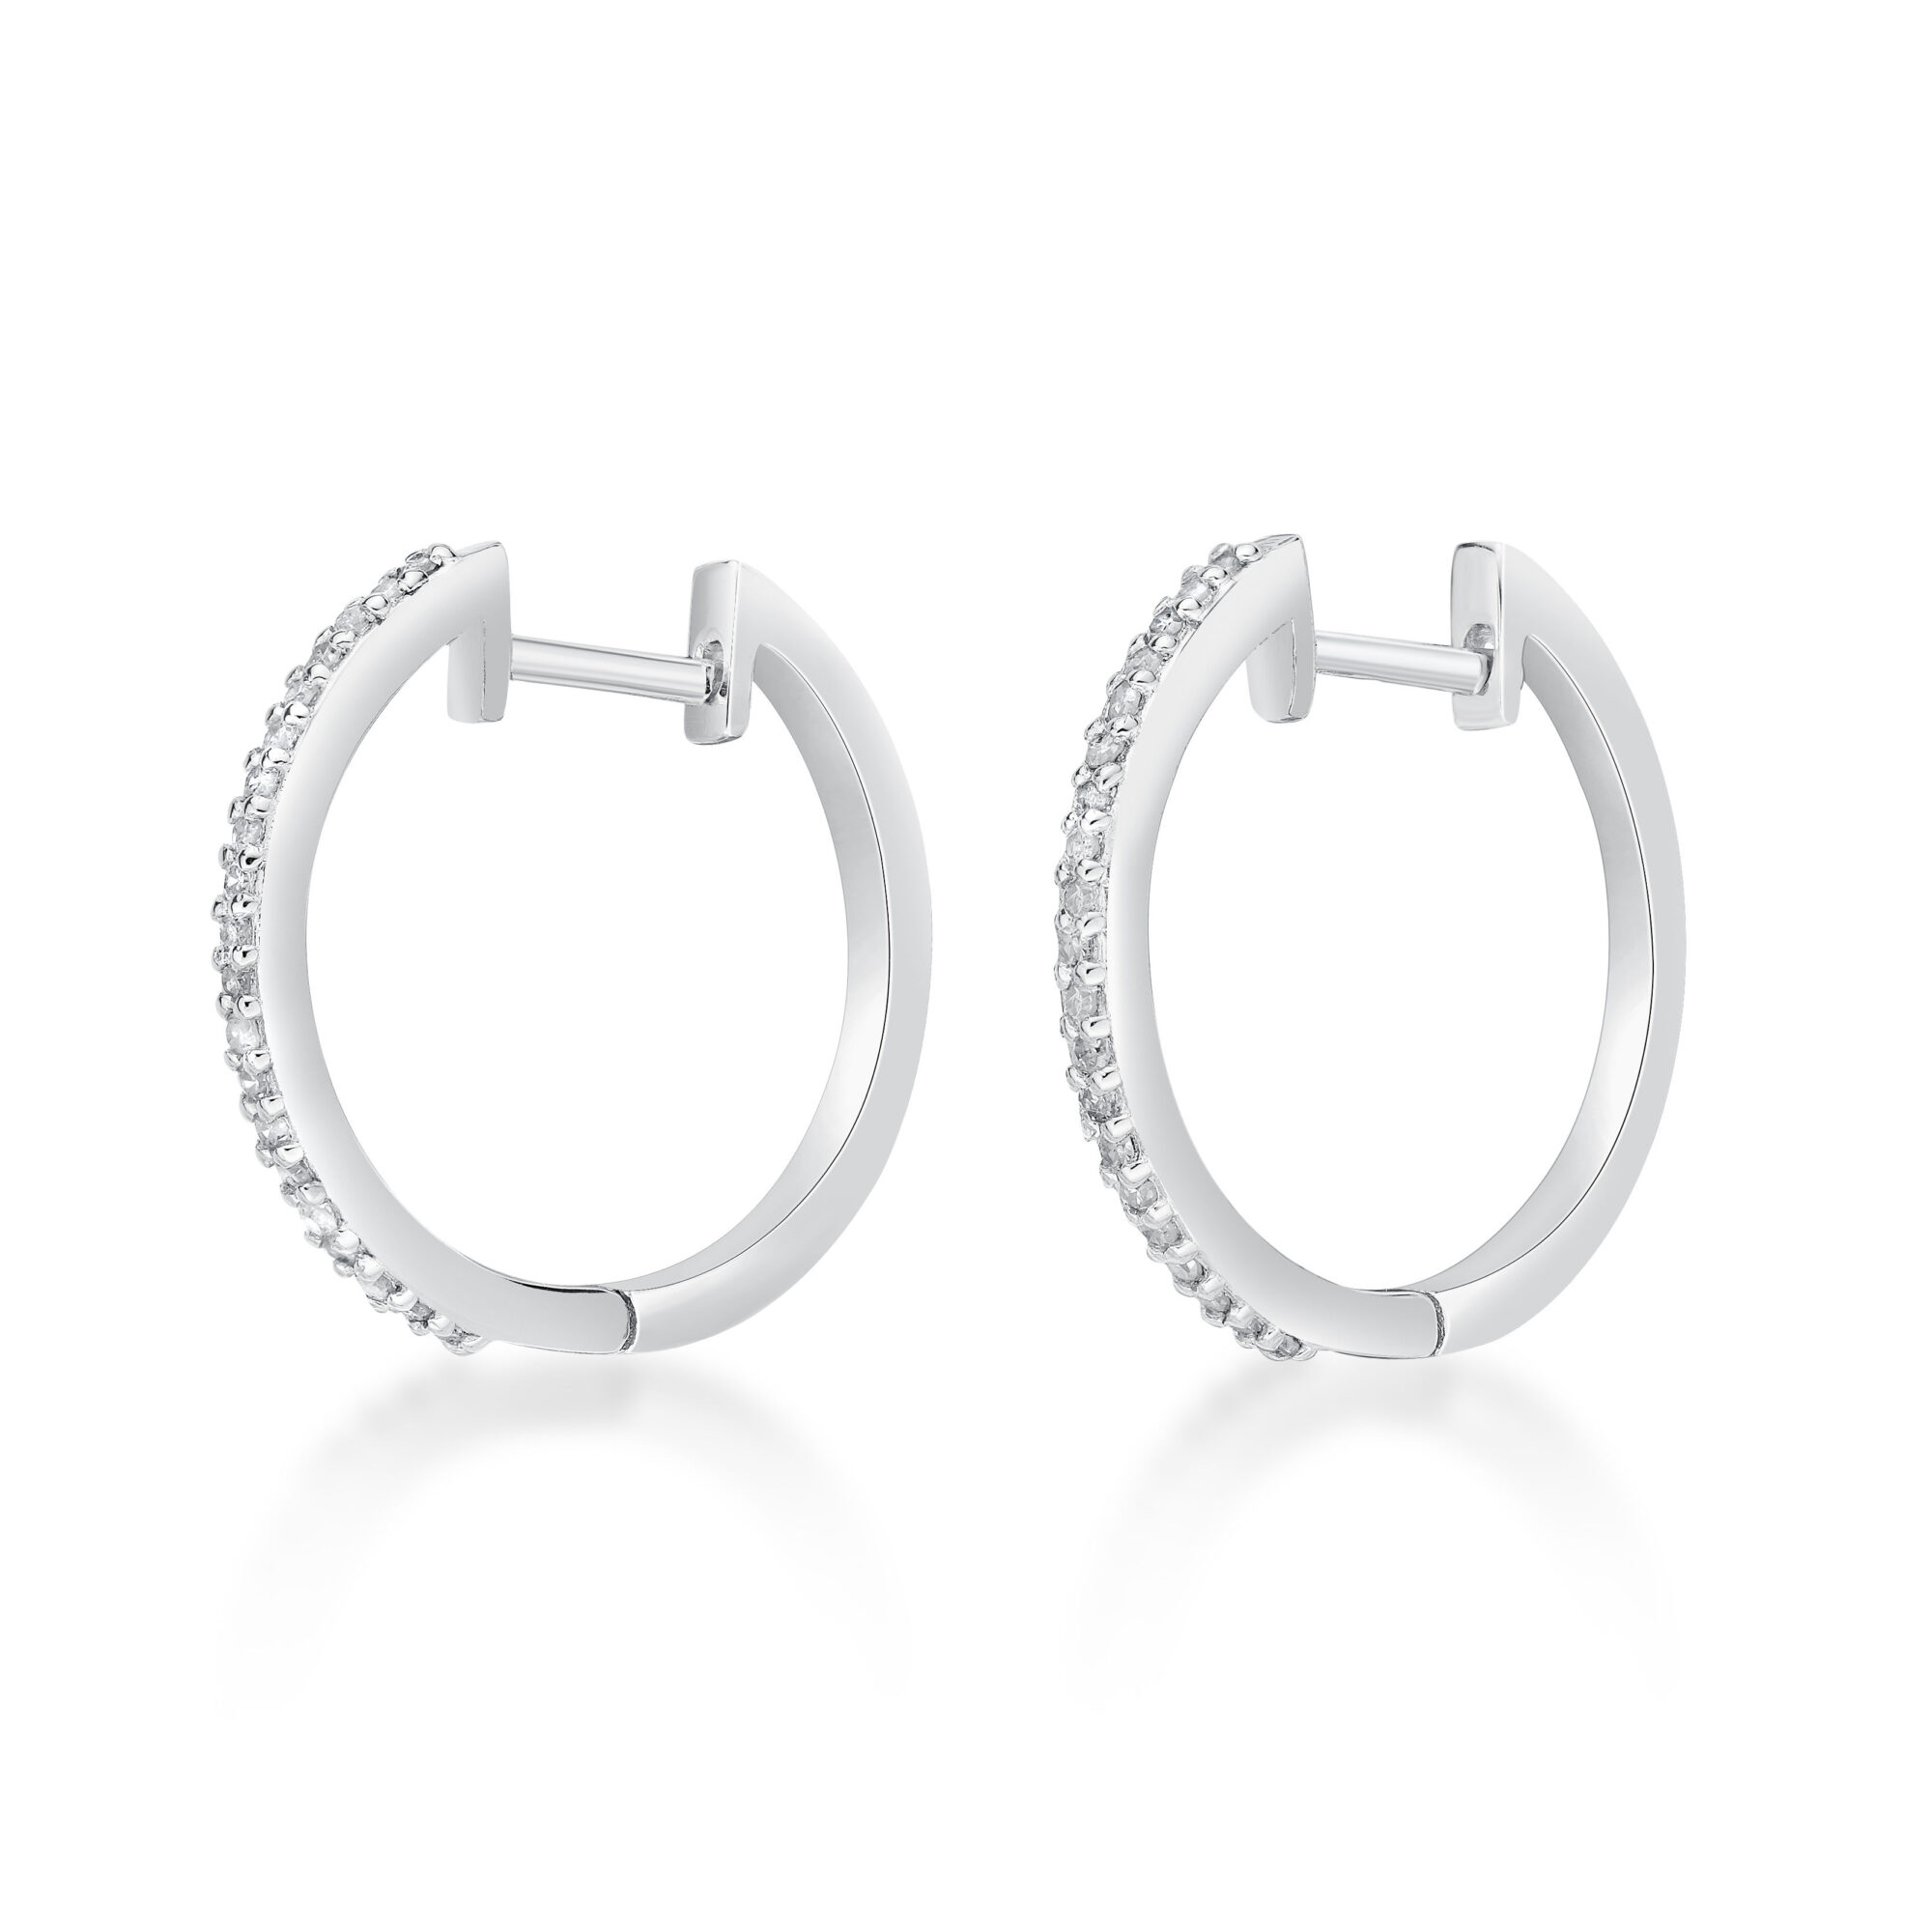 Lavari Jewelers Women's Diamond Hoop Earrings, Sterling Silver, .16 Cttw, 17 MM